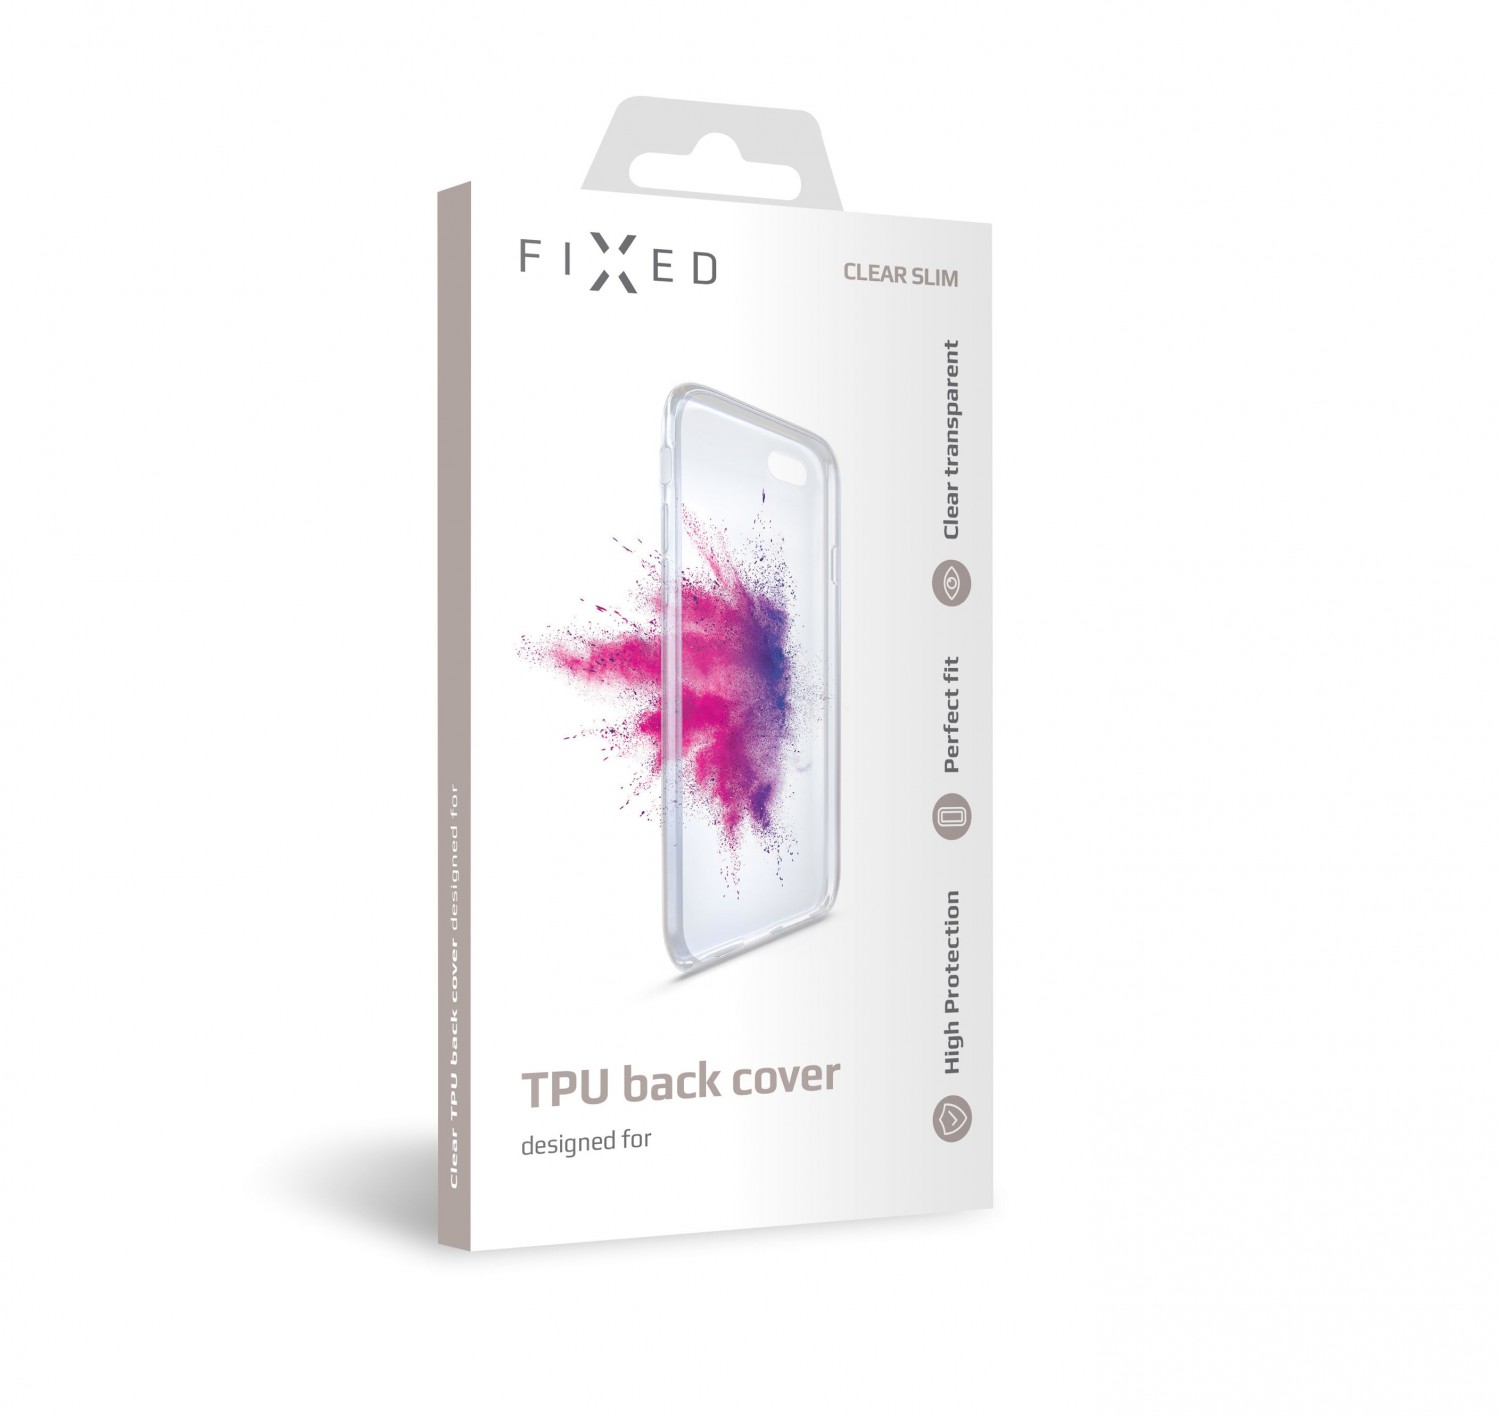 Silikonové pouzdro FIXED pro Apple iPhone XS, čiré